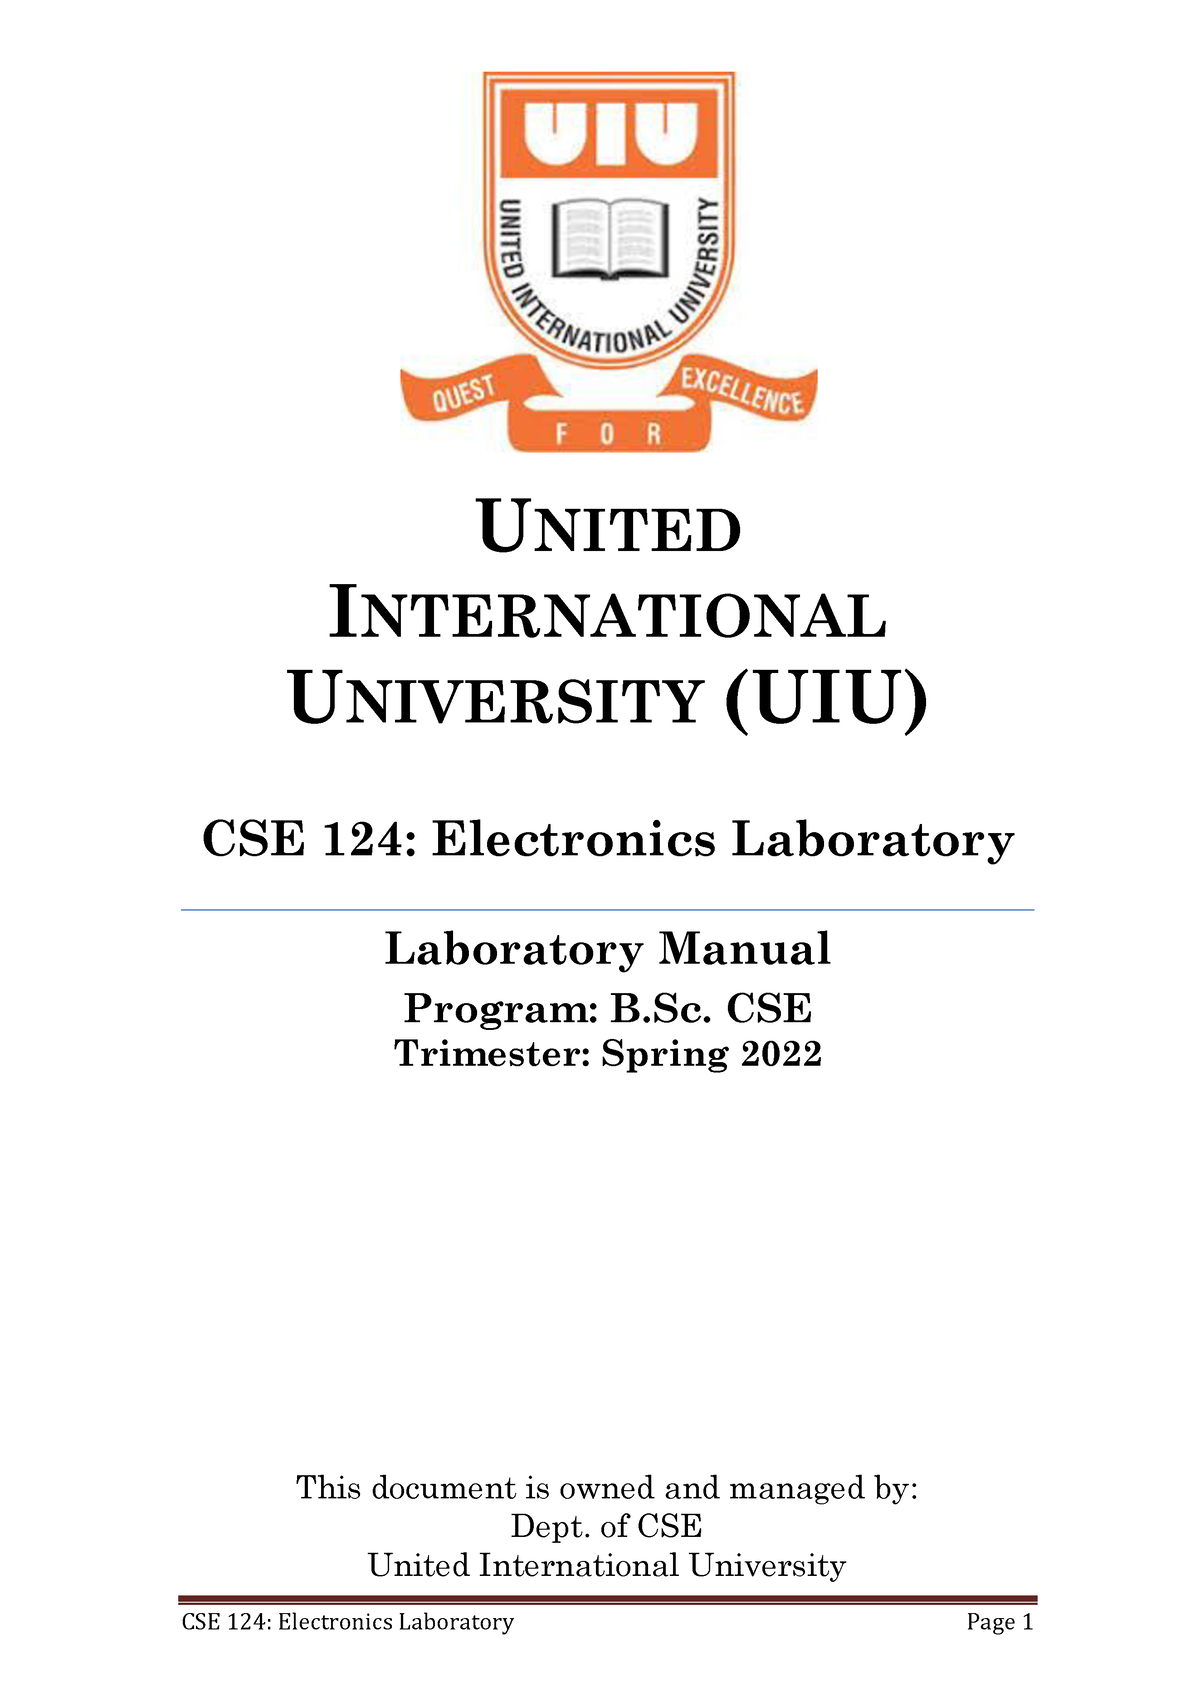 CSE 124 Draft Lab Manual Spring 2022 UNITED INTERNATIONAL UNIVERSITY